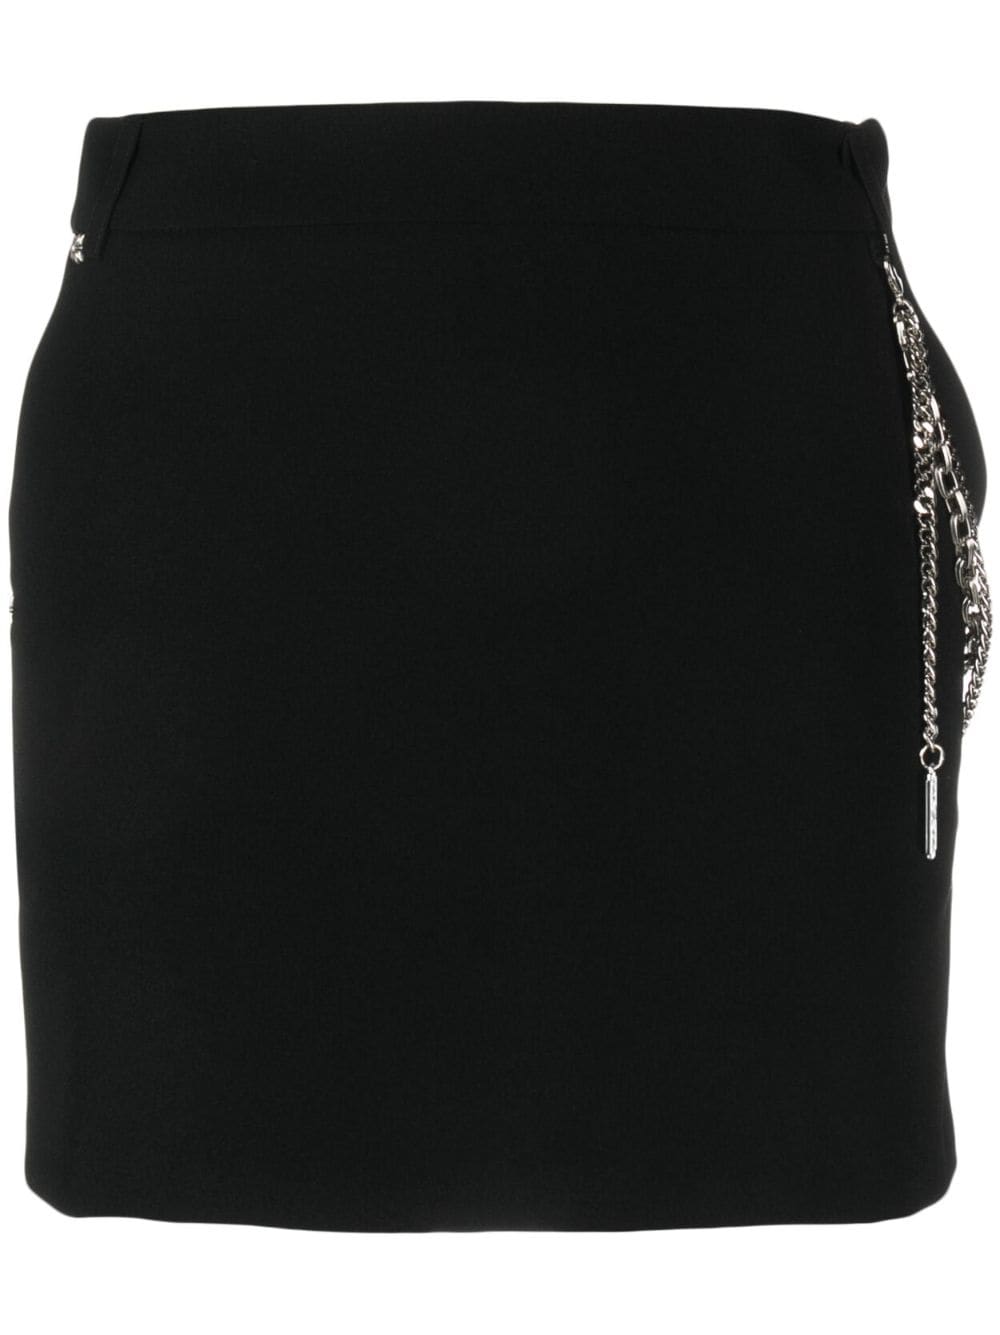 John Richmond Miniskirt With Chain In Black